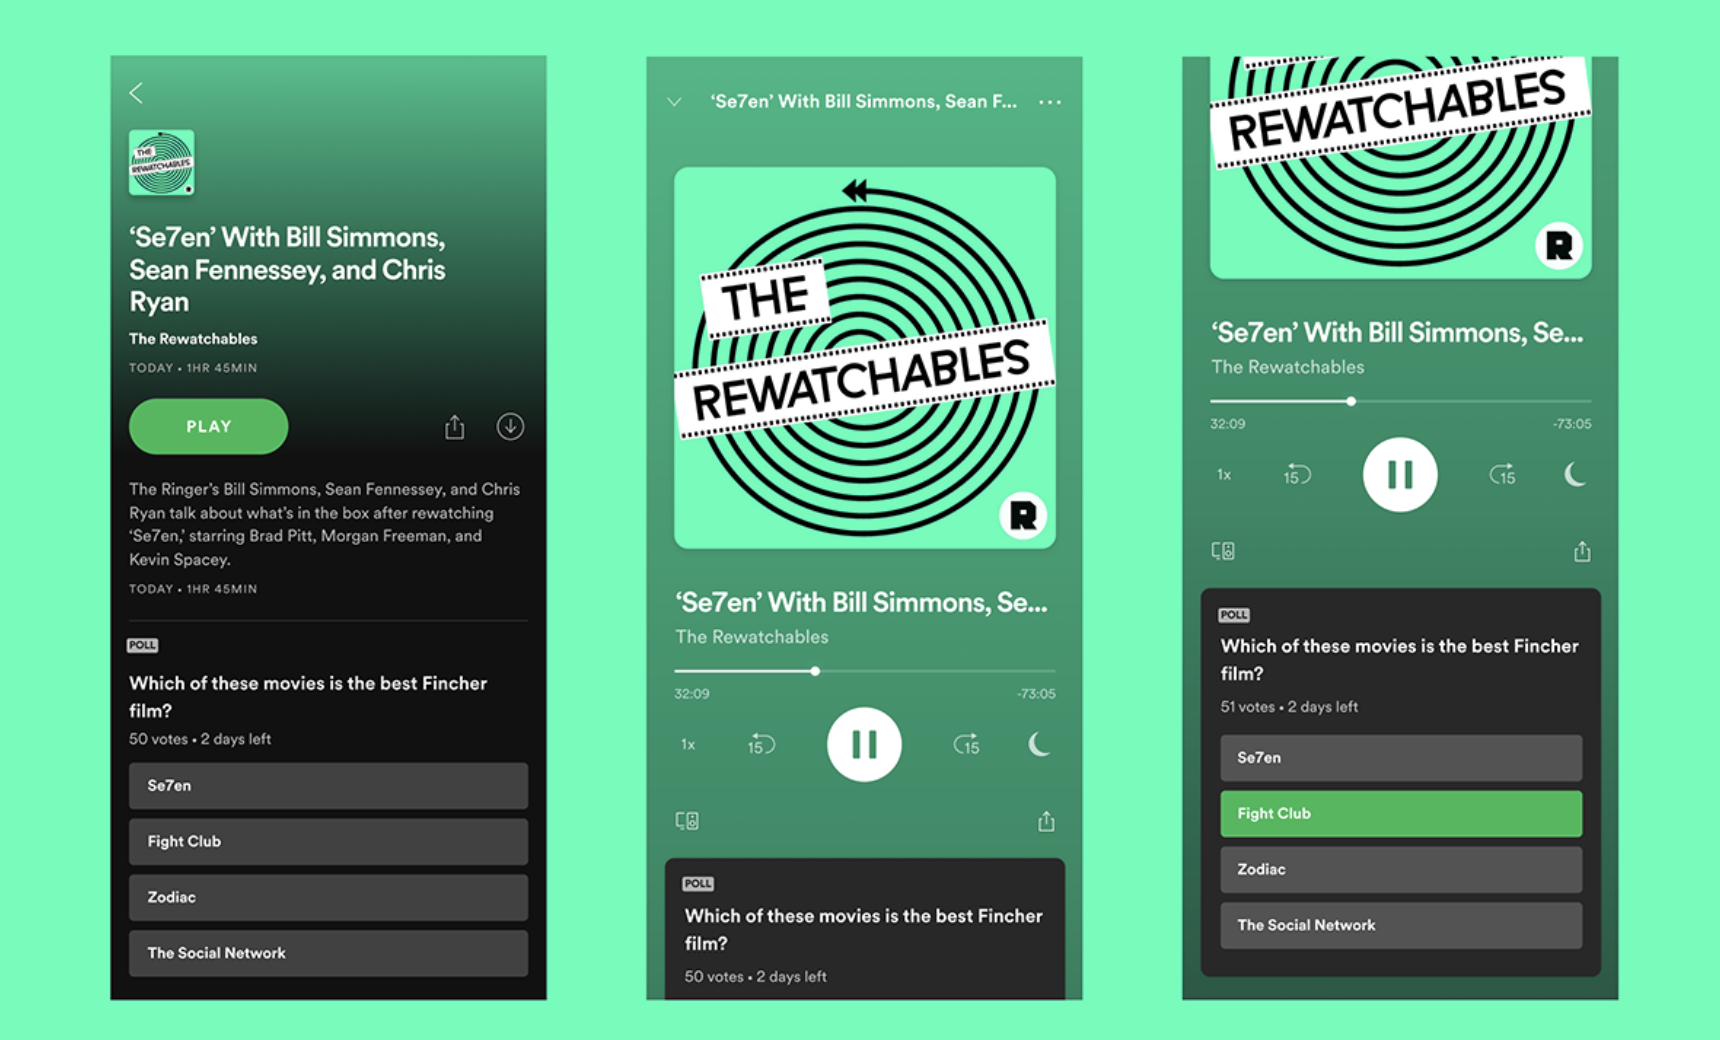 Spotify s'essaie aux podcasts interactifs